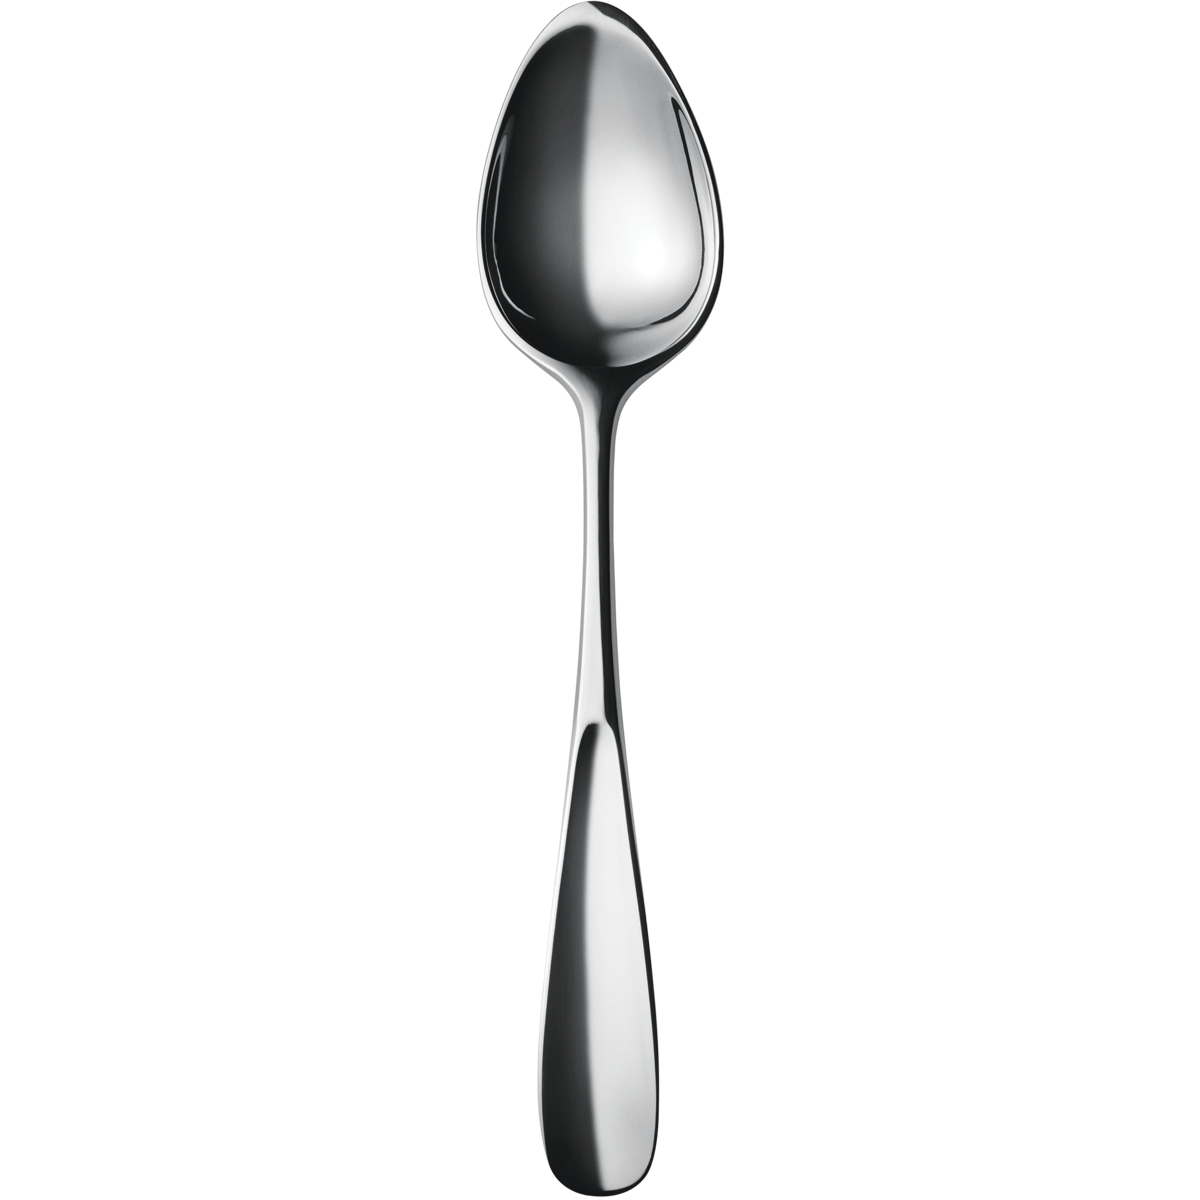 Steel Spoon Transparent Image PNG Image